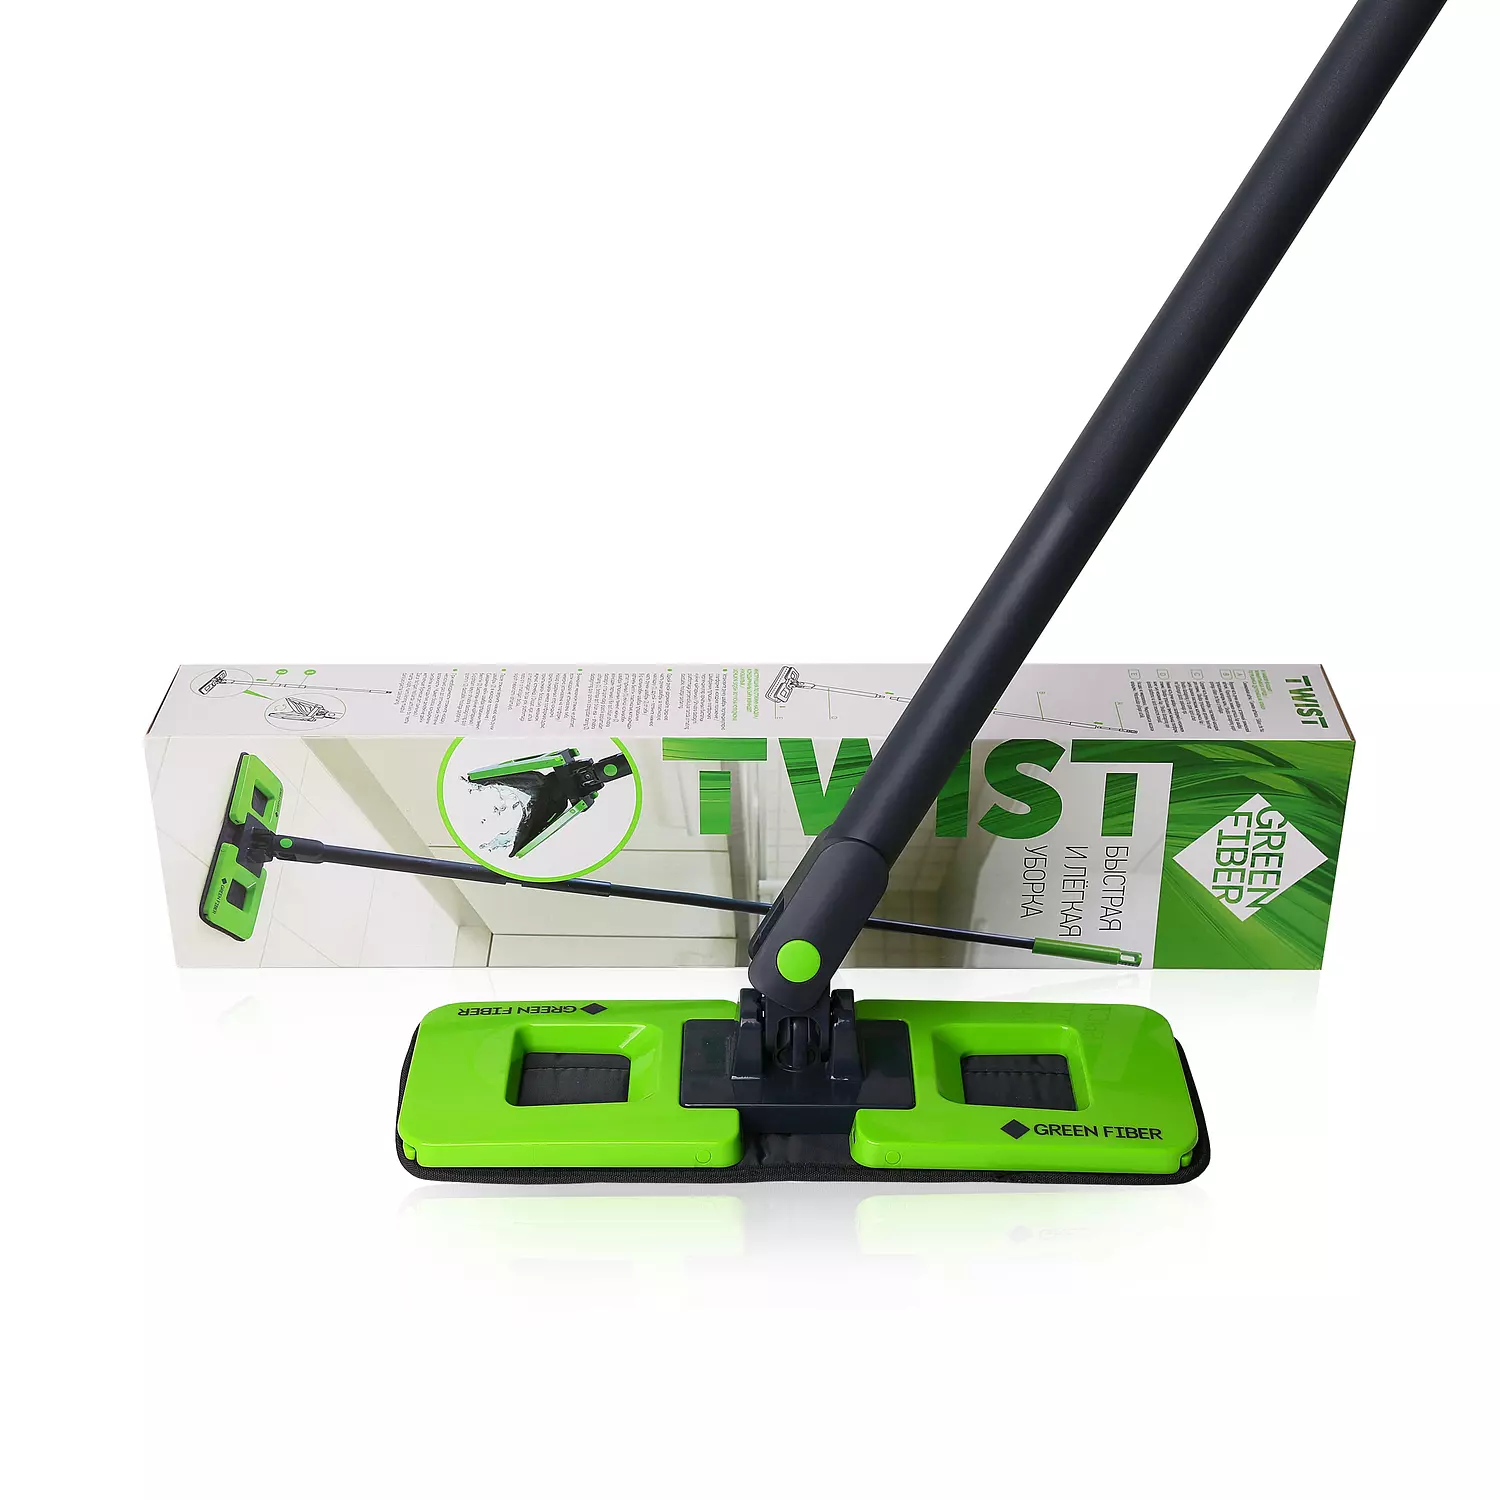 Green Fiber TWIST Squeeze Mop 0